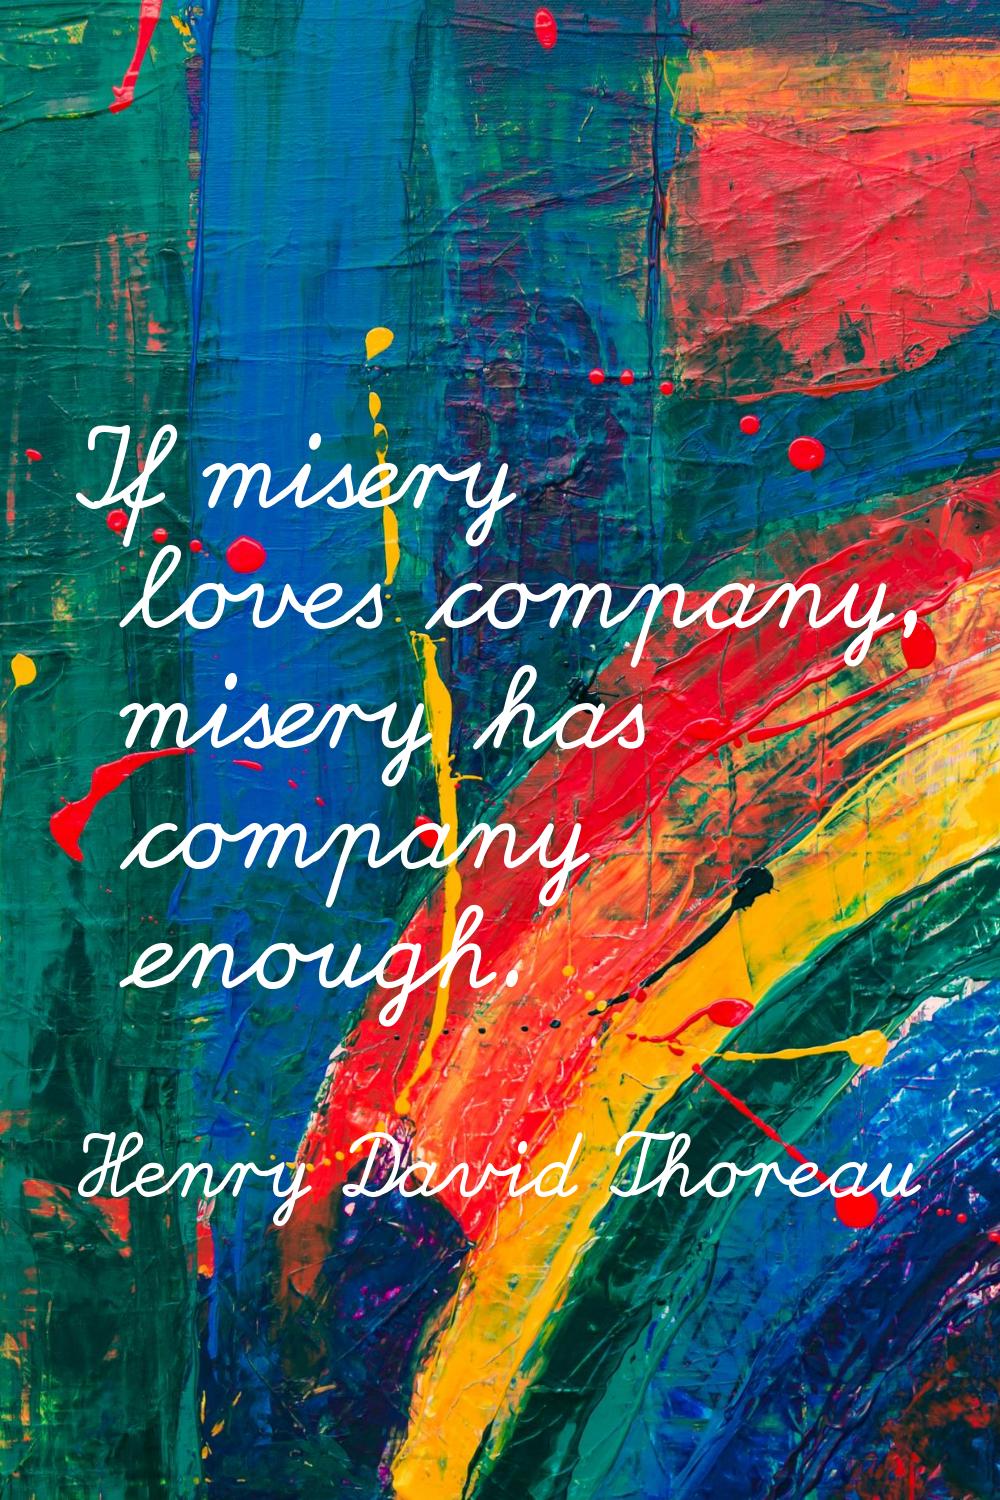 If misery loves company, misery has company enough.